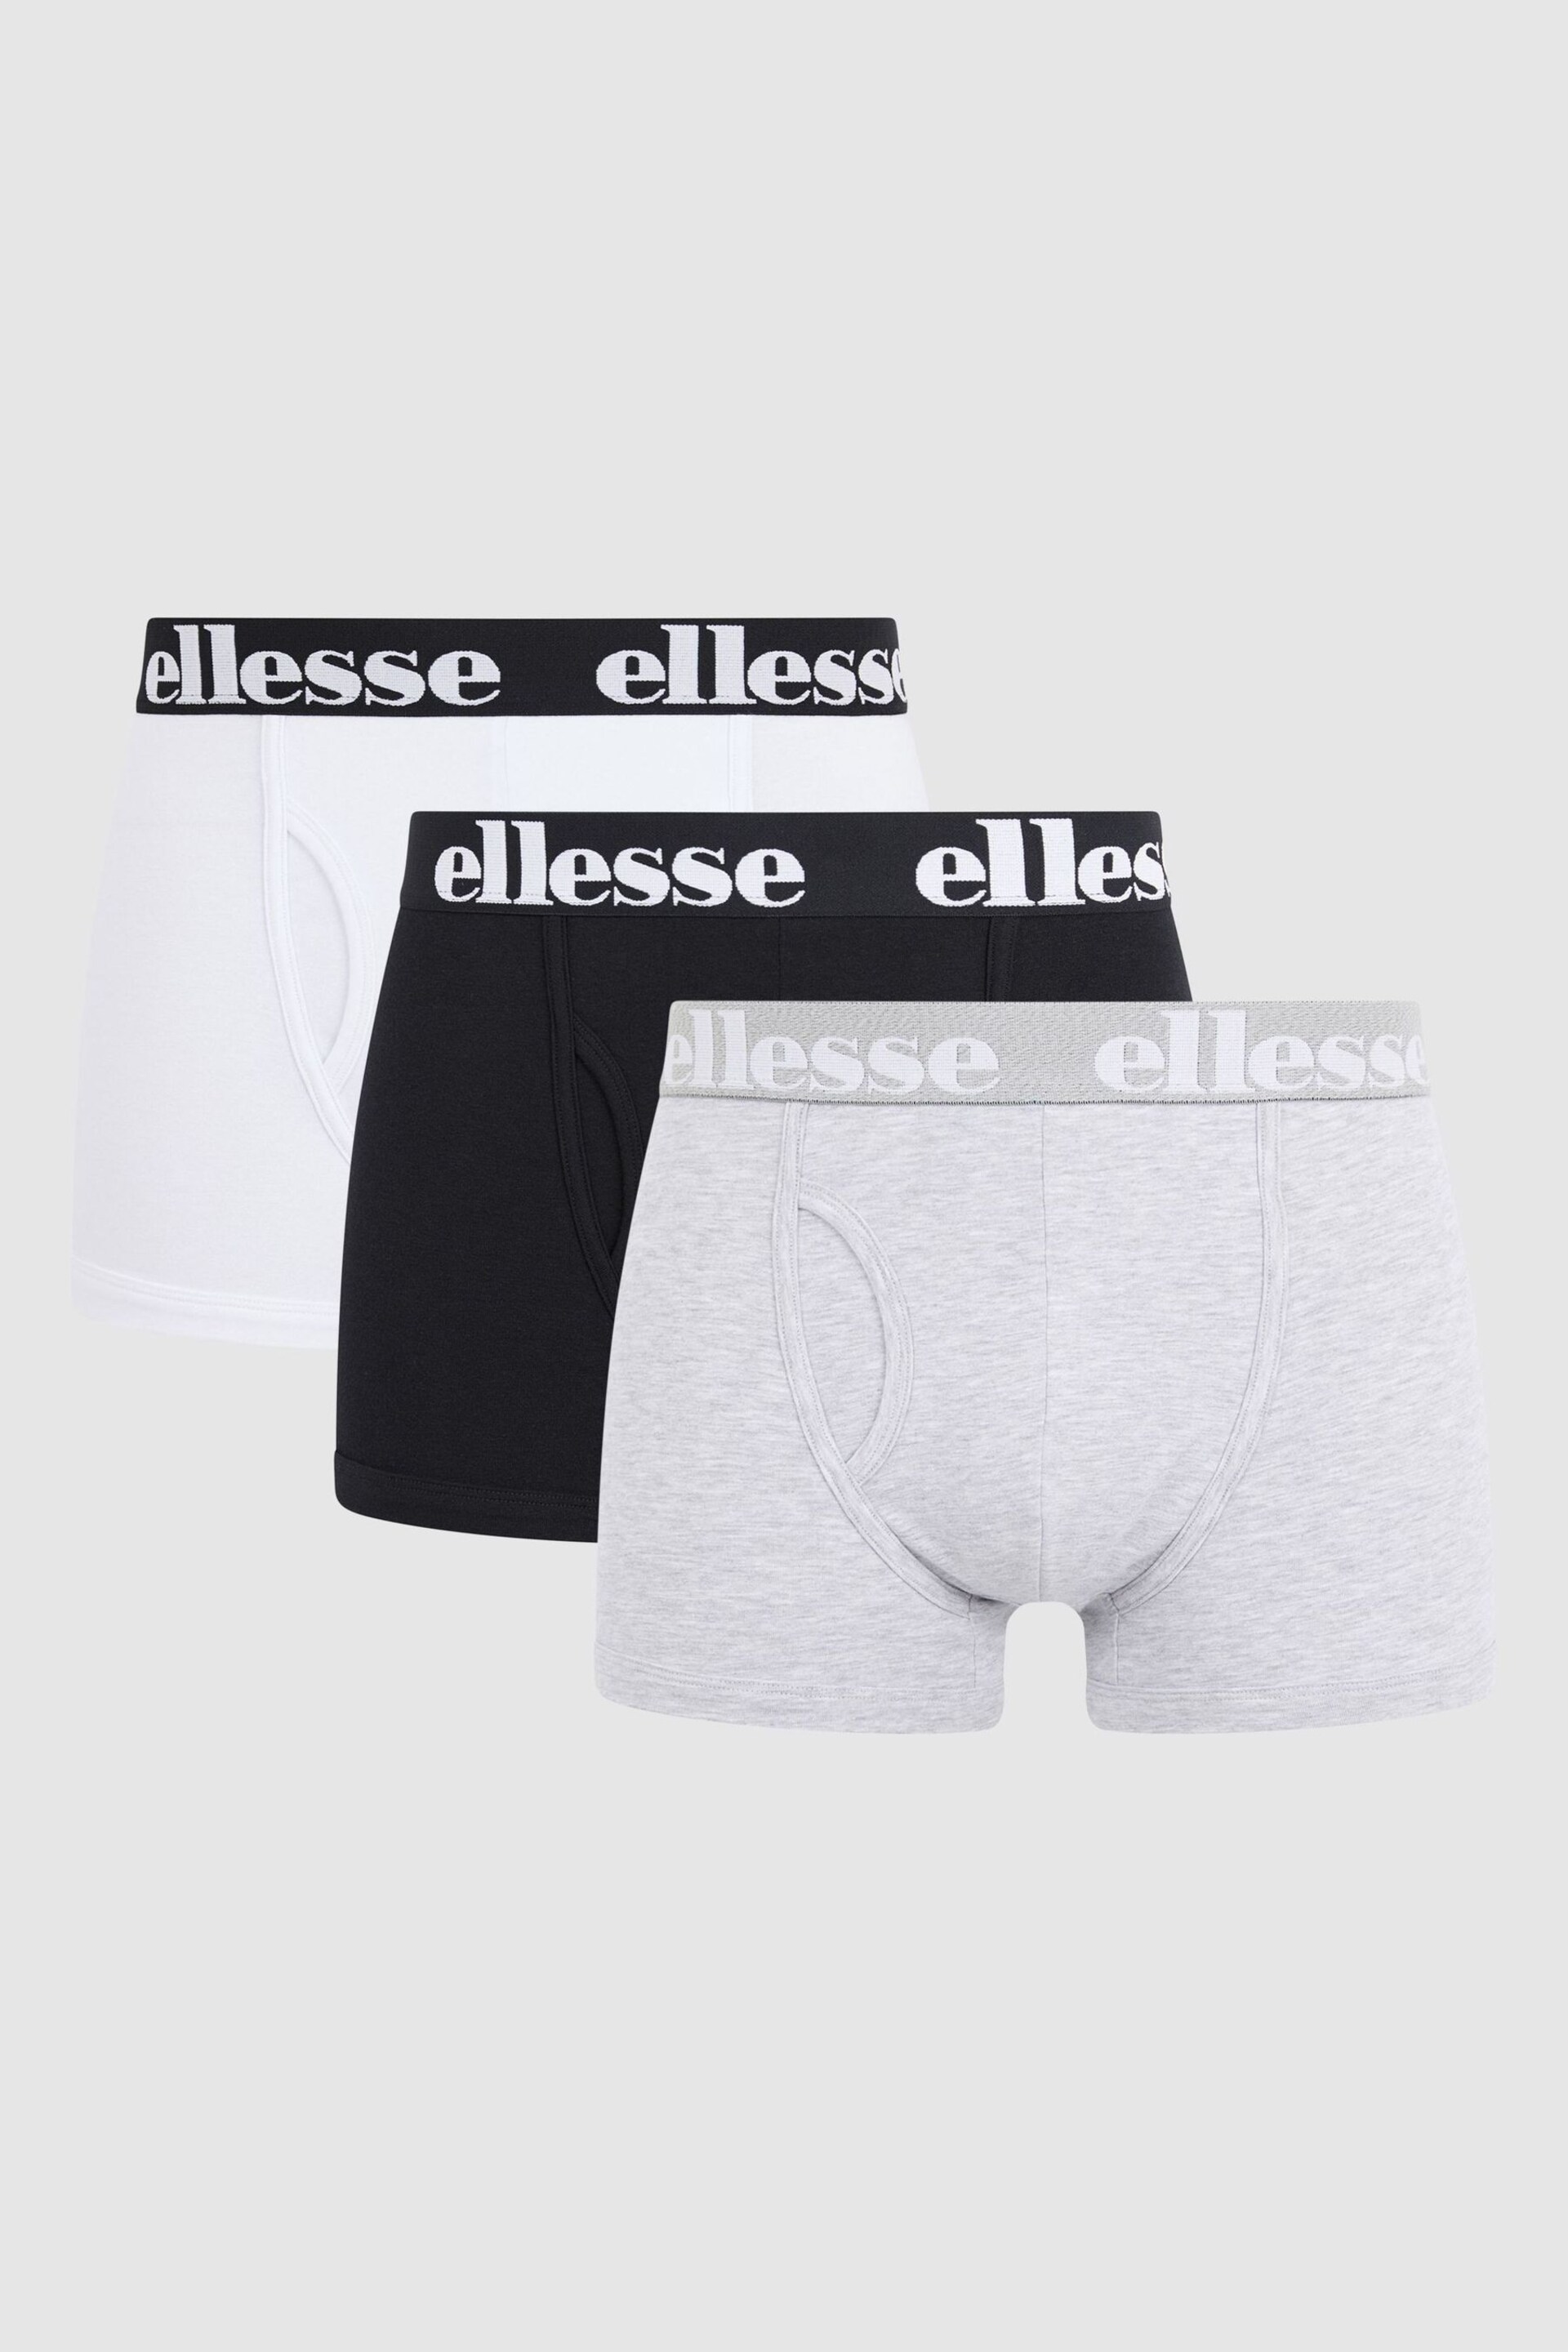 Ellesse Multi/White Hali Boxers 3 Pack - Image 1 of 6